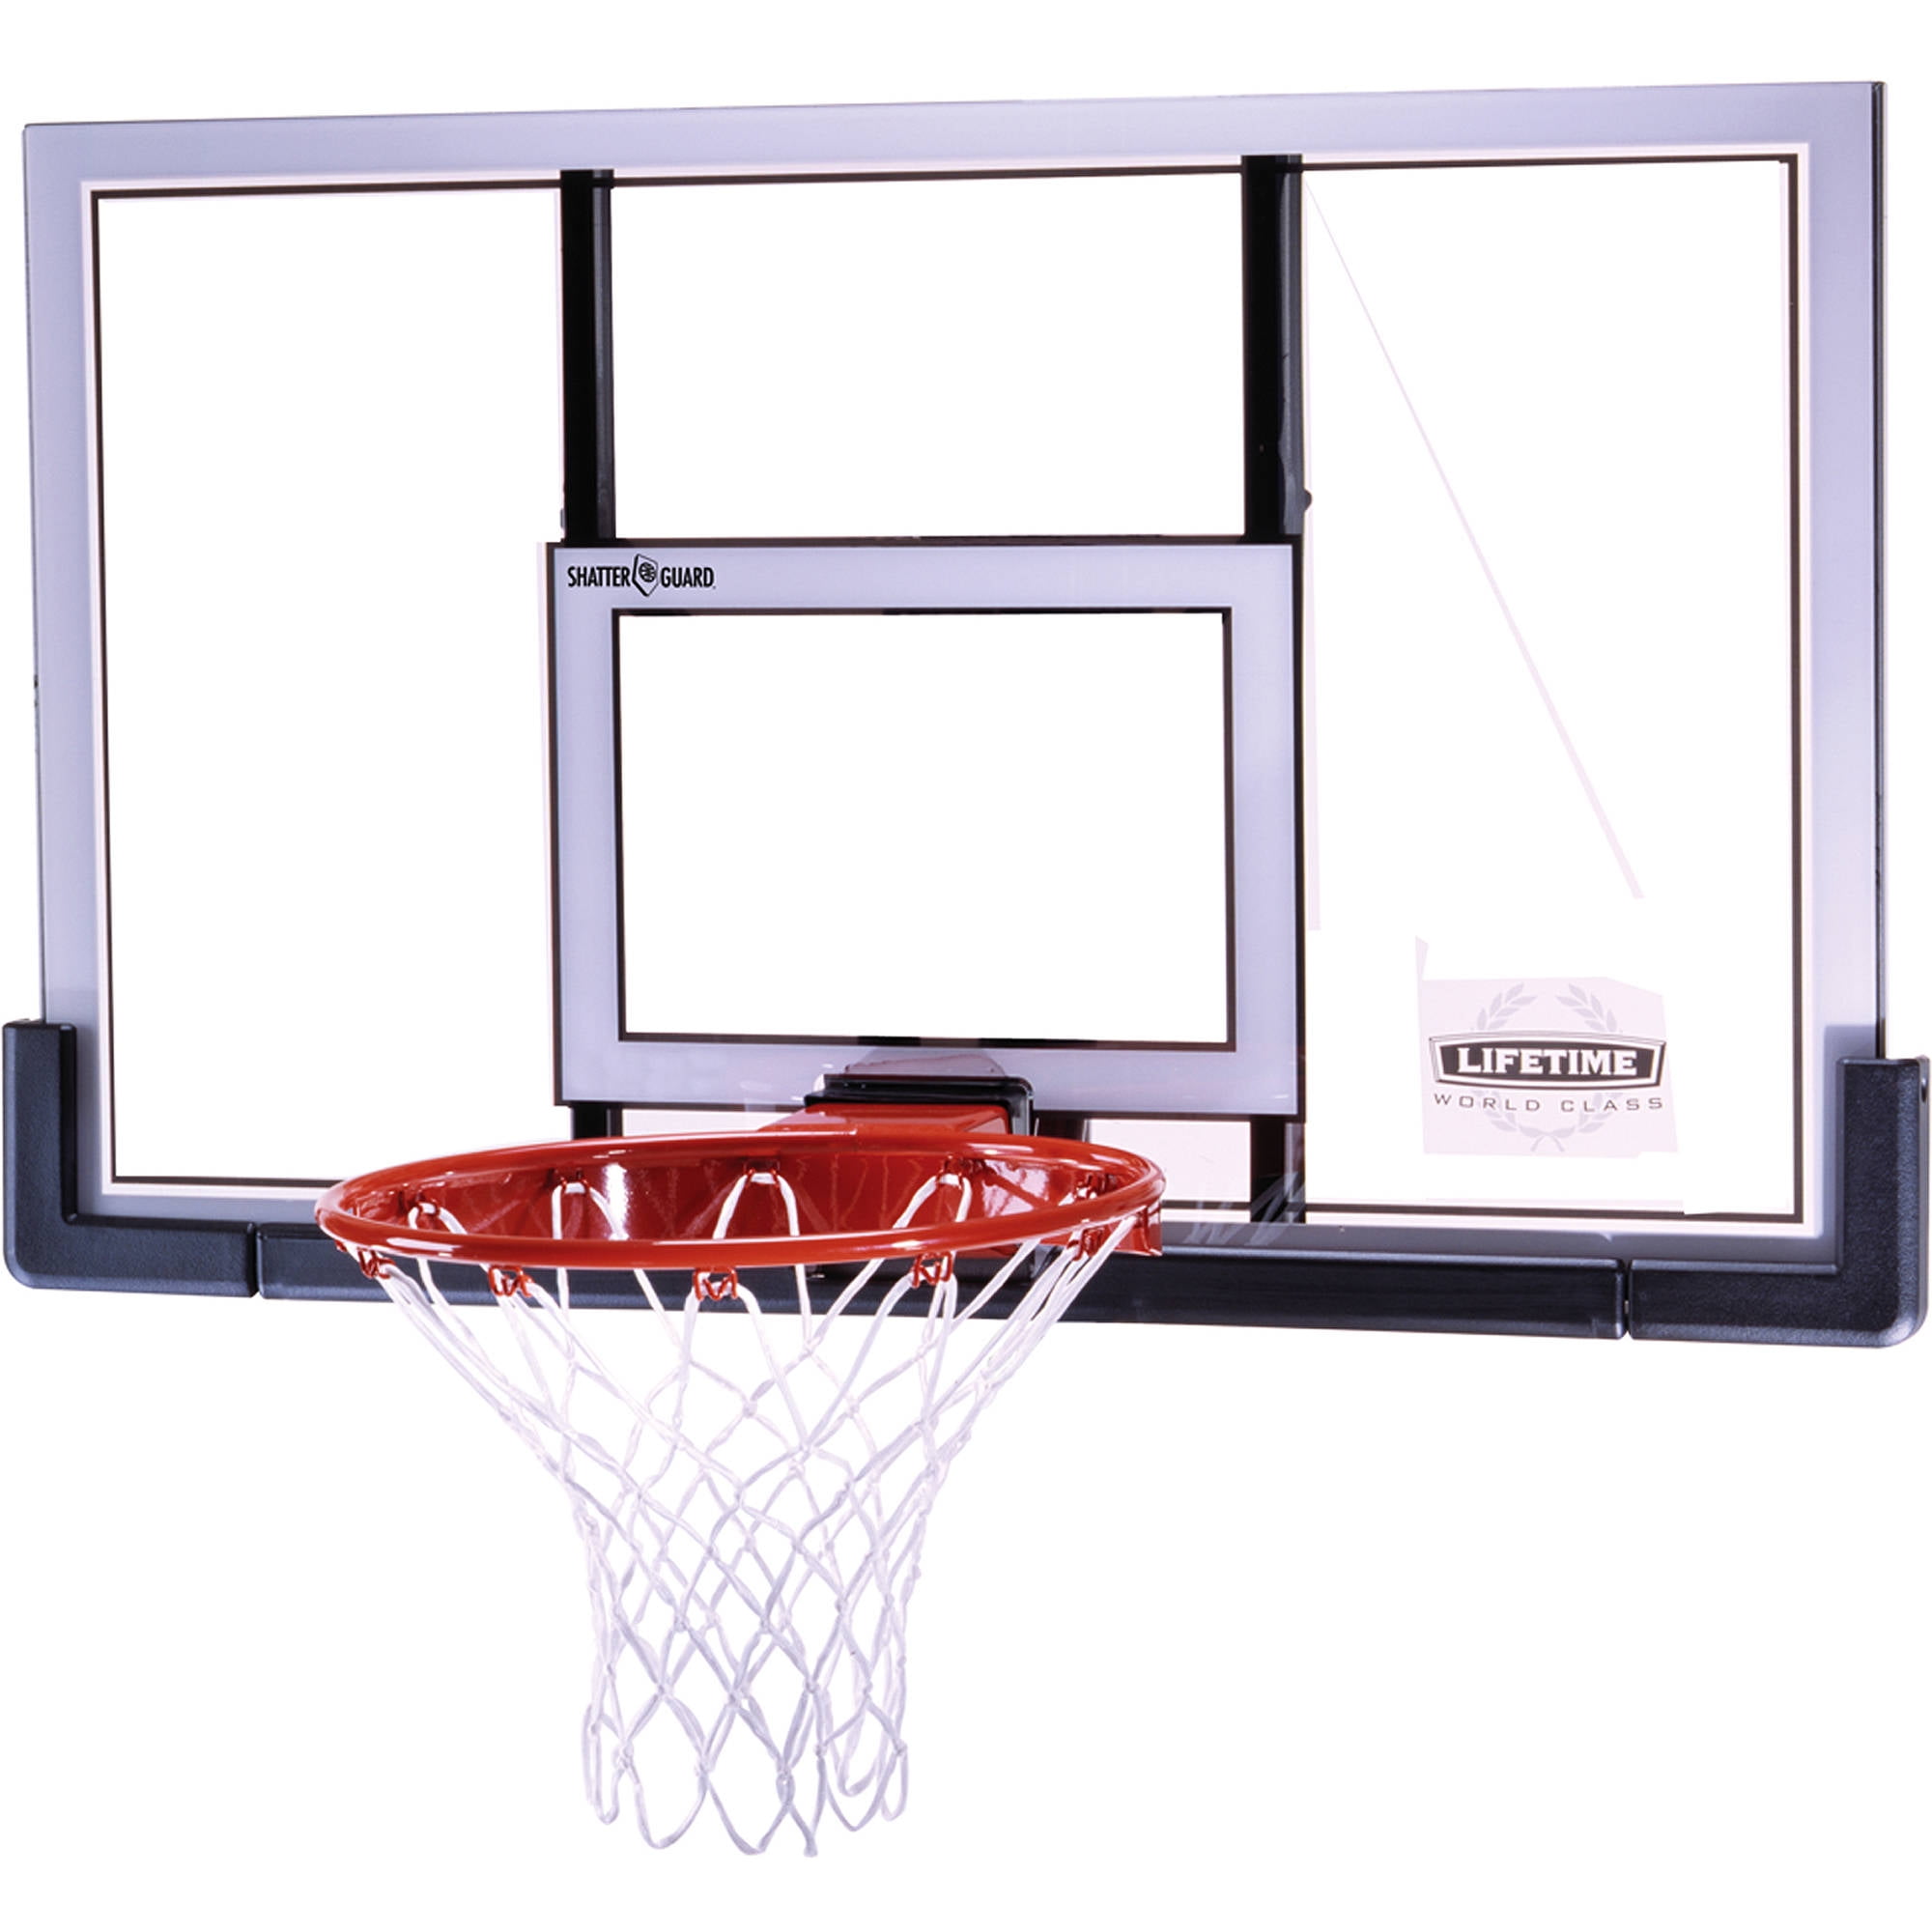 Lifetime 48 Shatterproof and Rim Basketball Combo, 73729 - Walmart.com